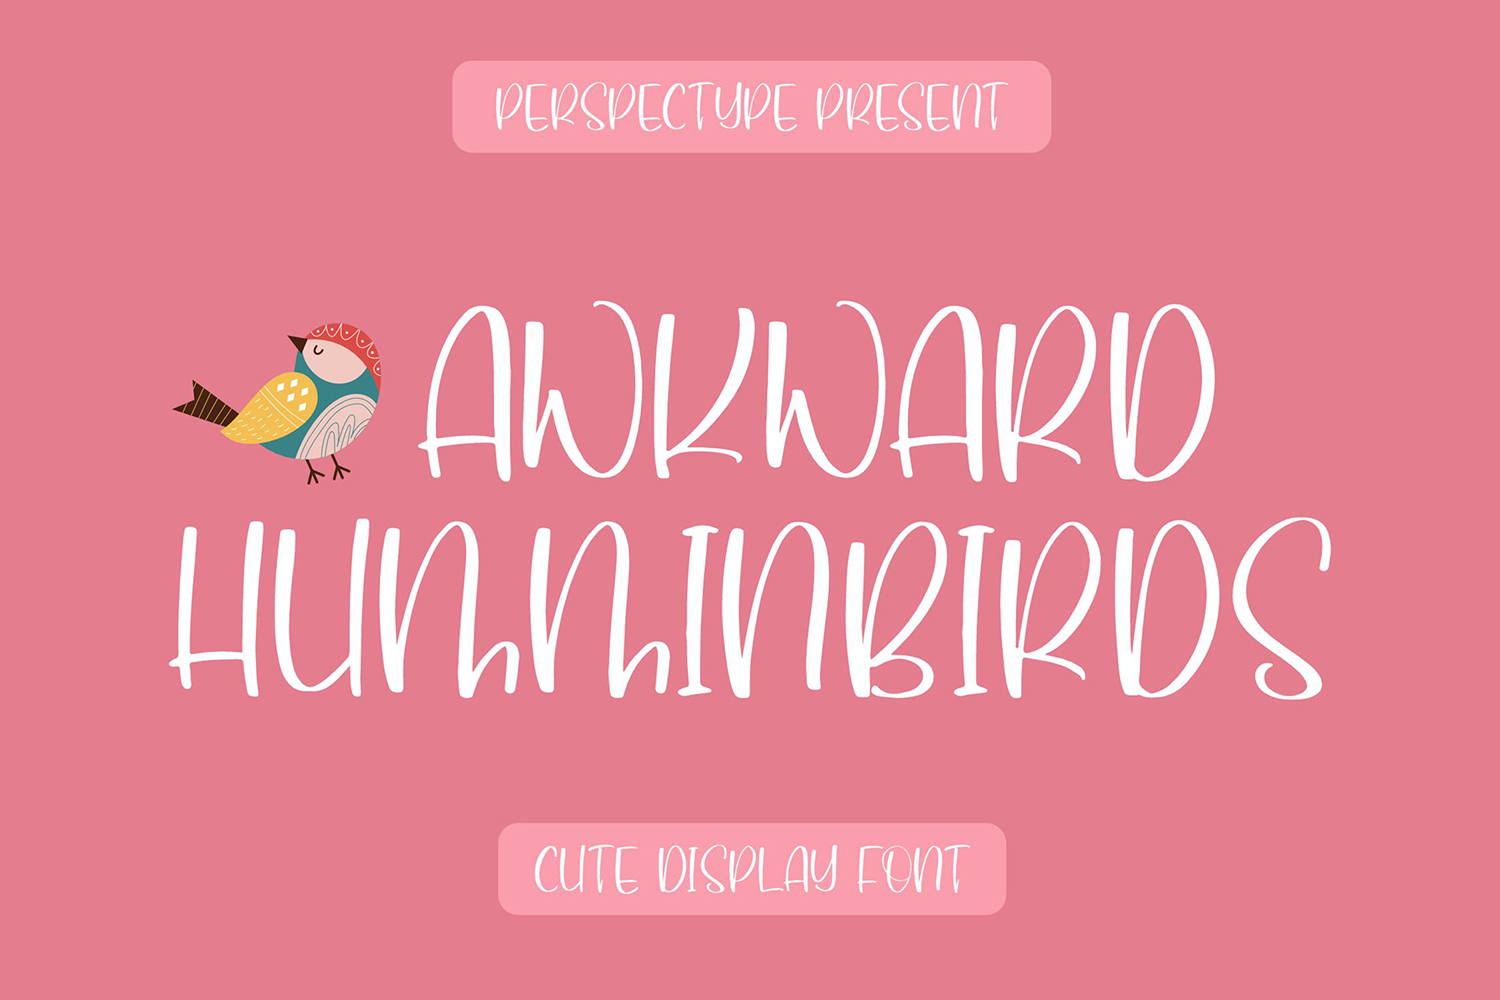 Awkward Humminbirds Free Font